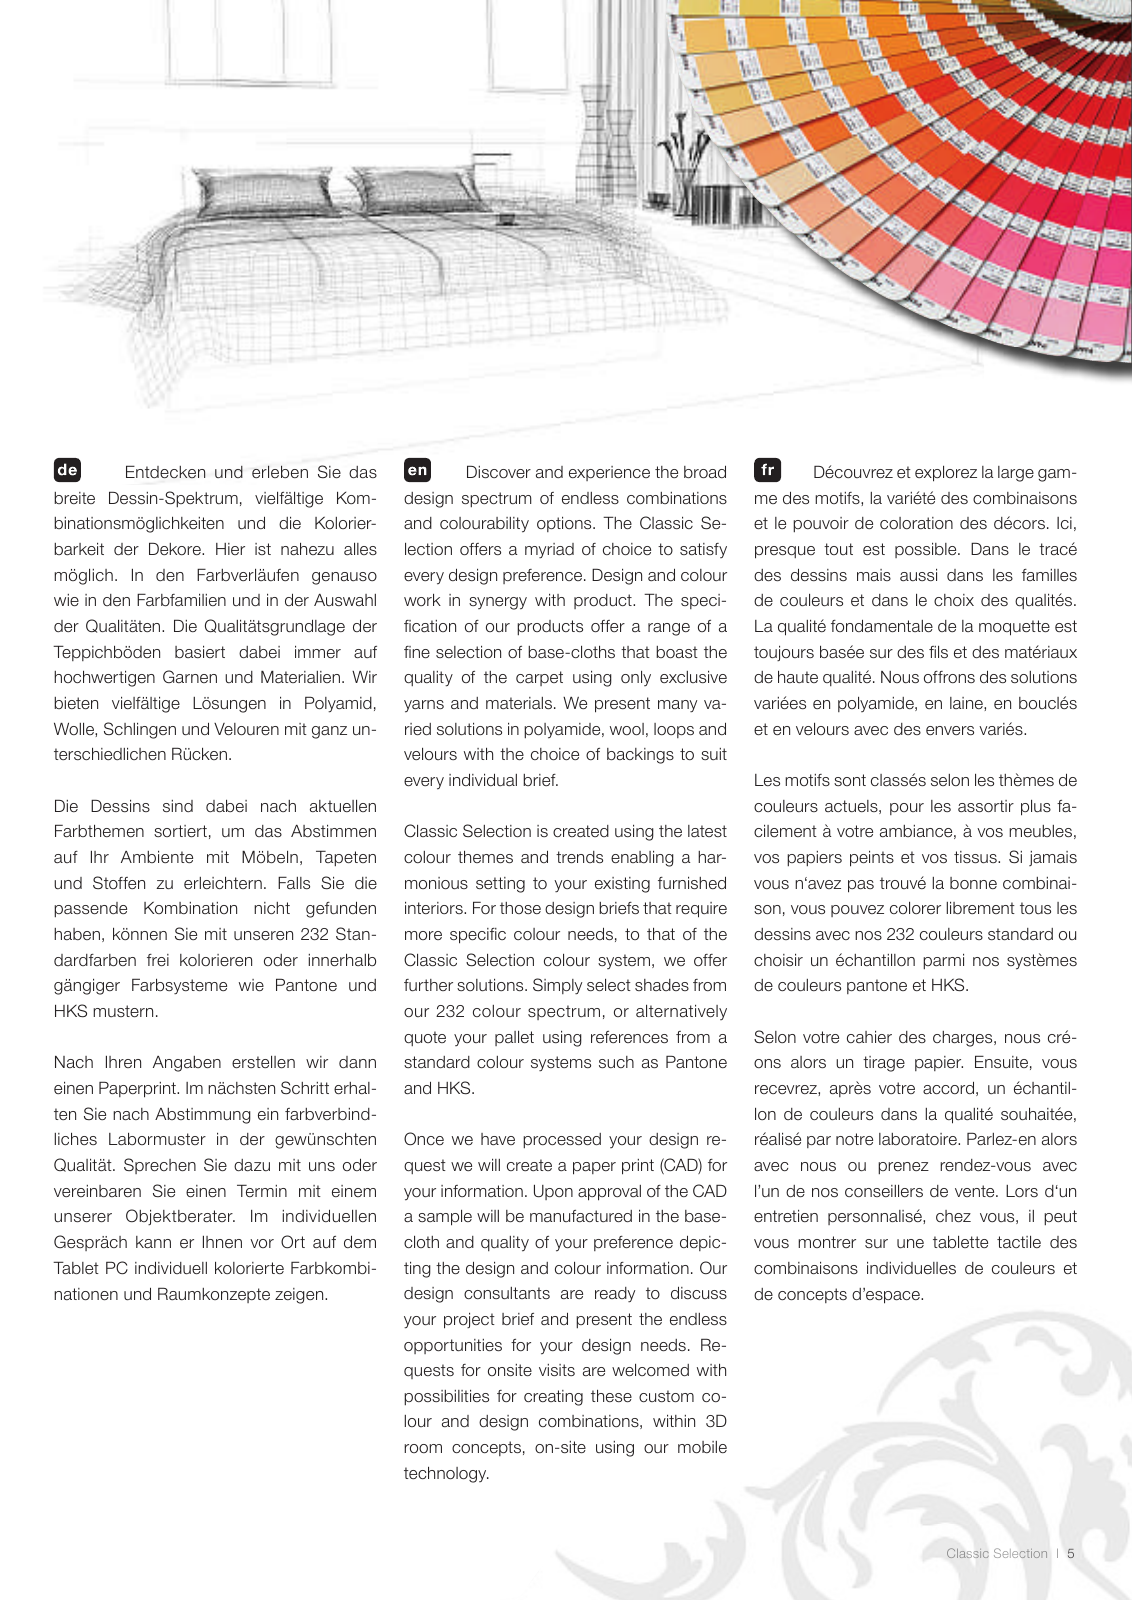 Vorschau DesignGuide03 - Classic Selection Seite 5